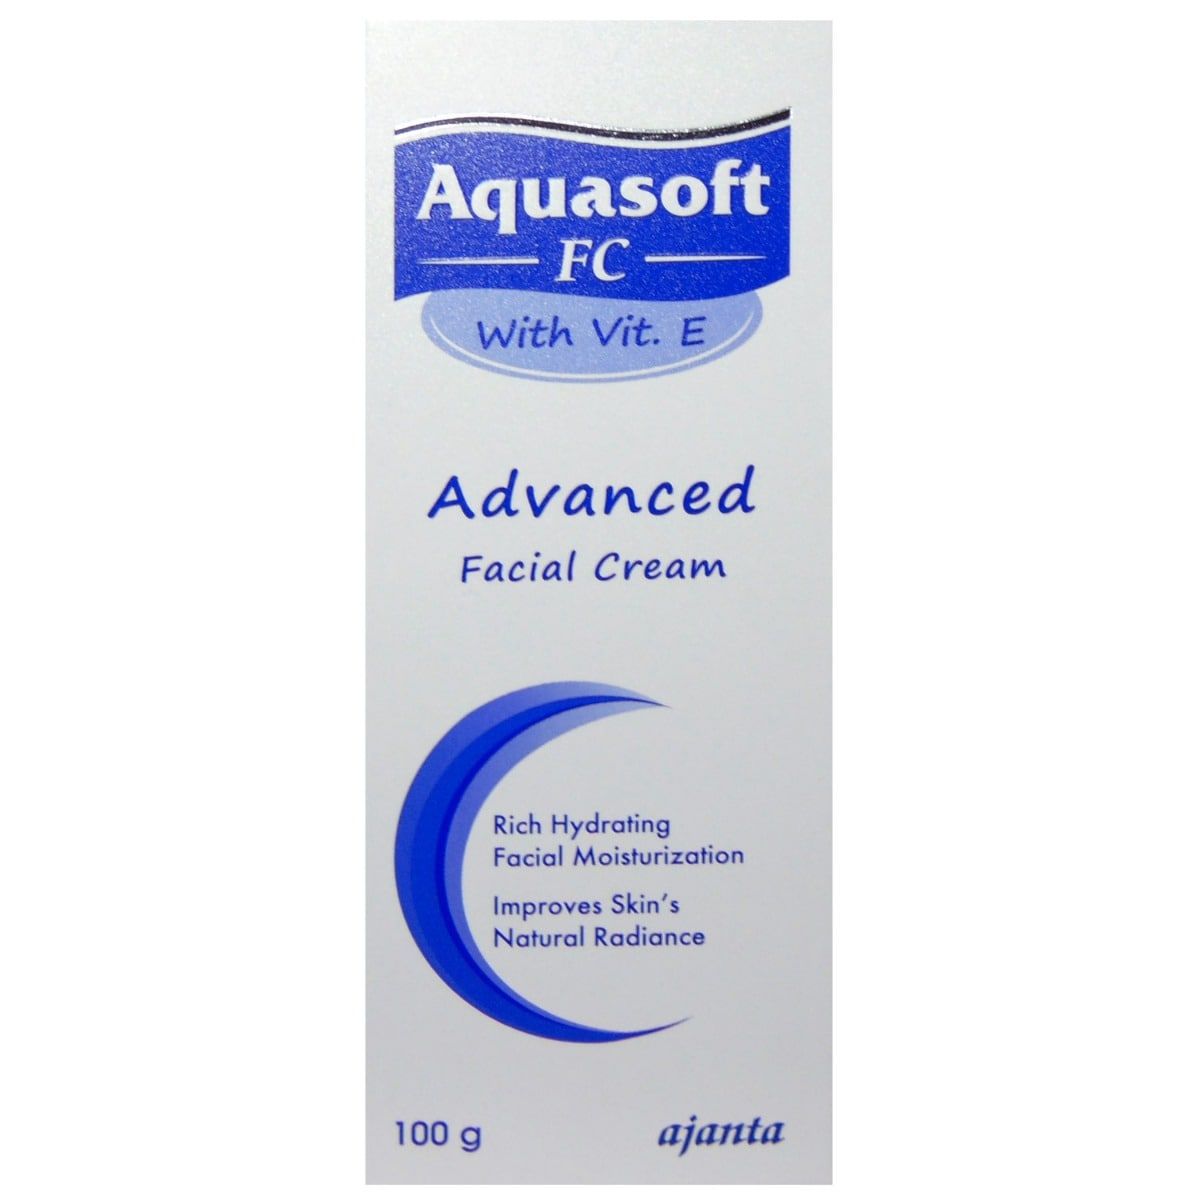 Buy Aquasoft FC Advanced Facial Cream 100 gm | With Vit E | Provides Hydration & Moisturisation Online